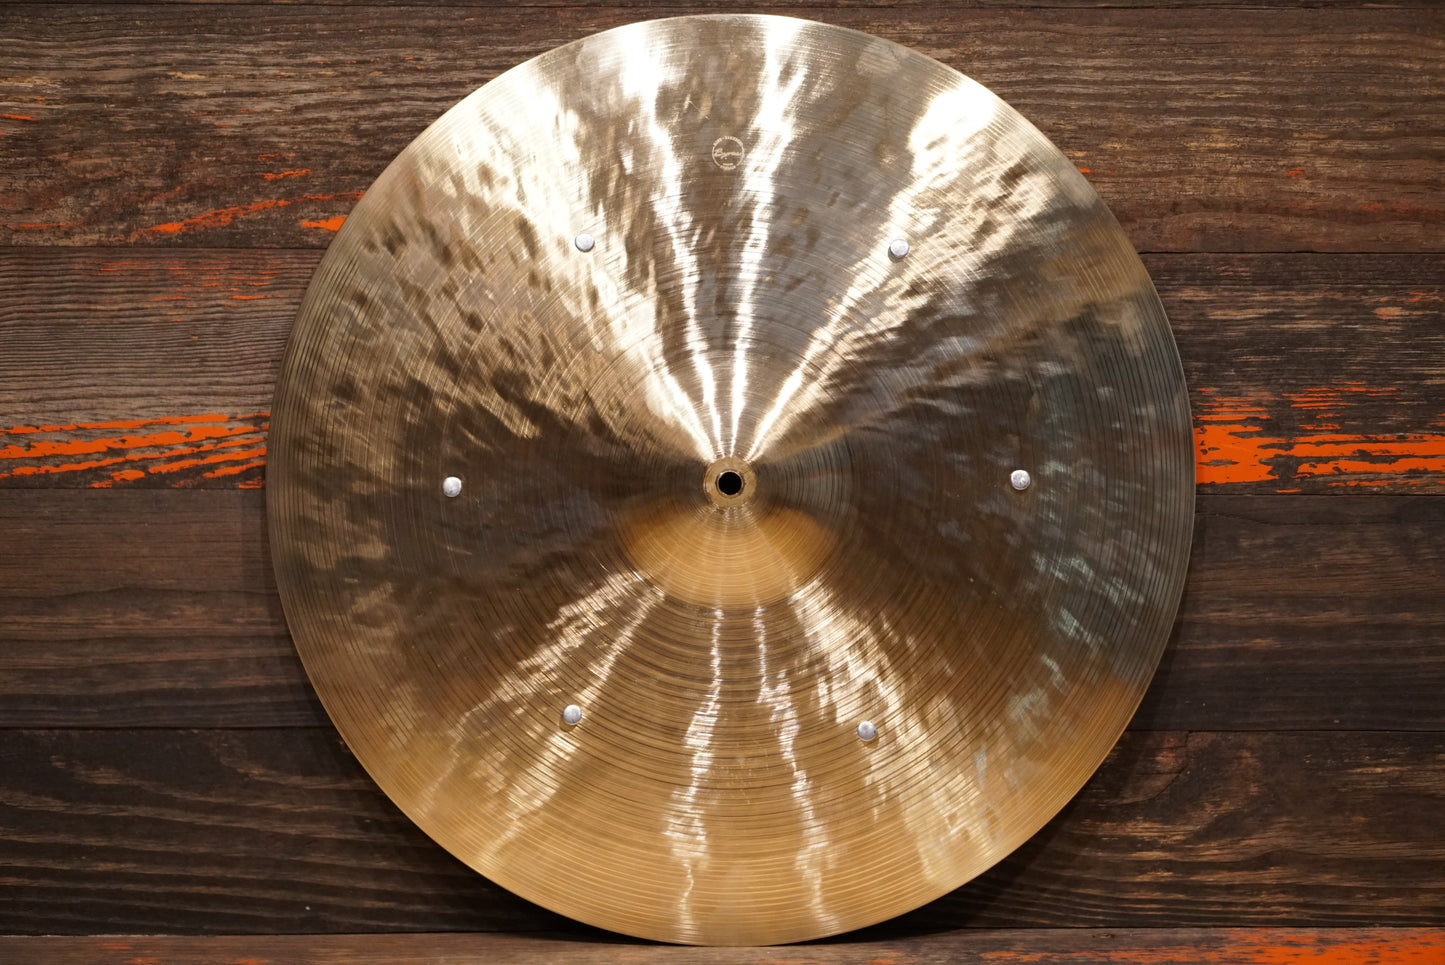 Byrne 20" Extra Light Rivet Ride Cymbal - 1612g